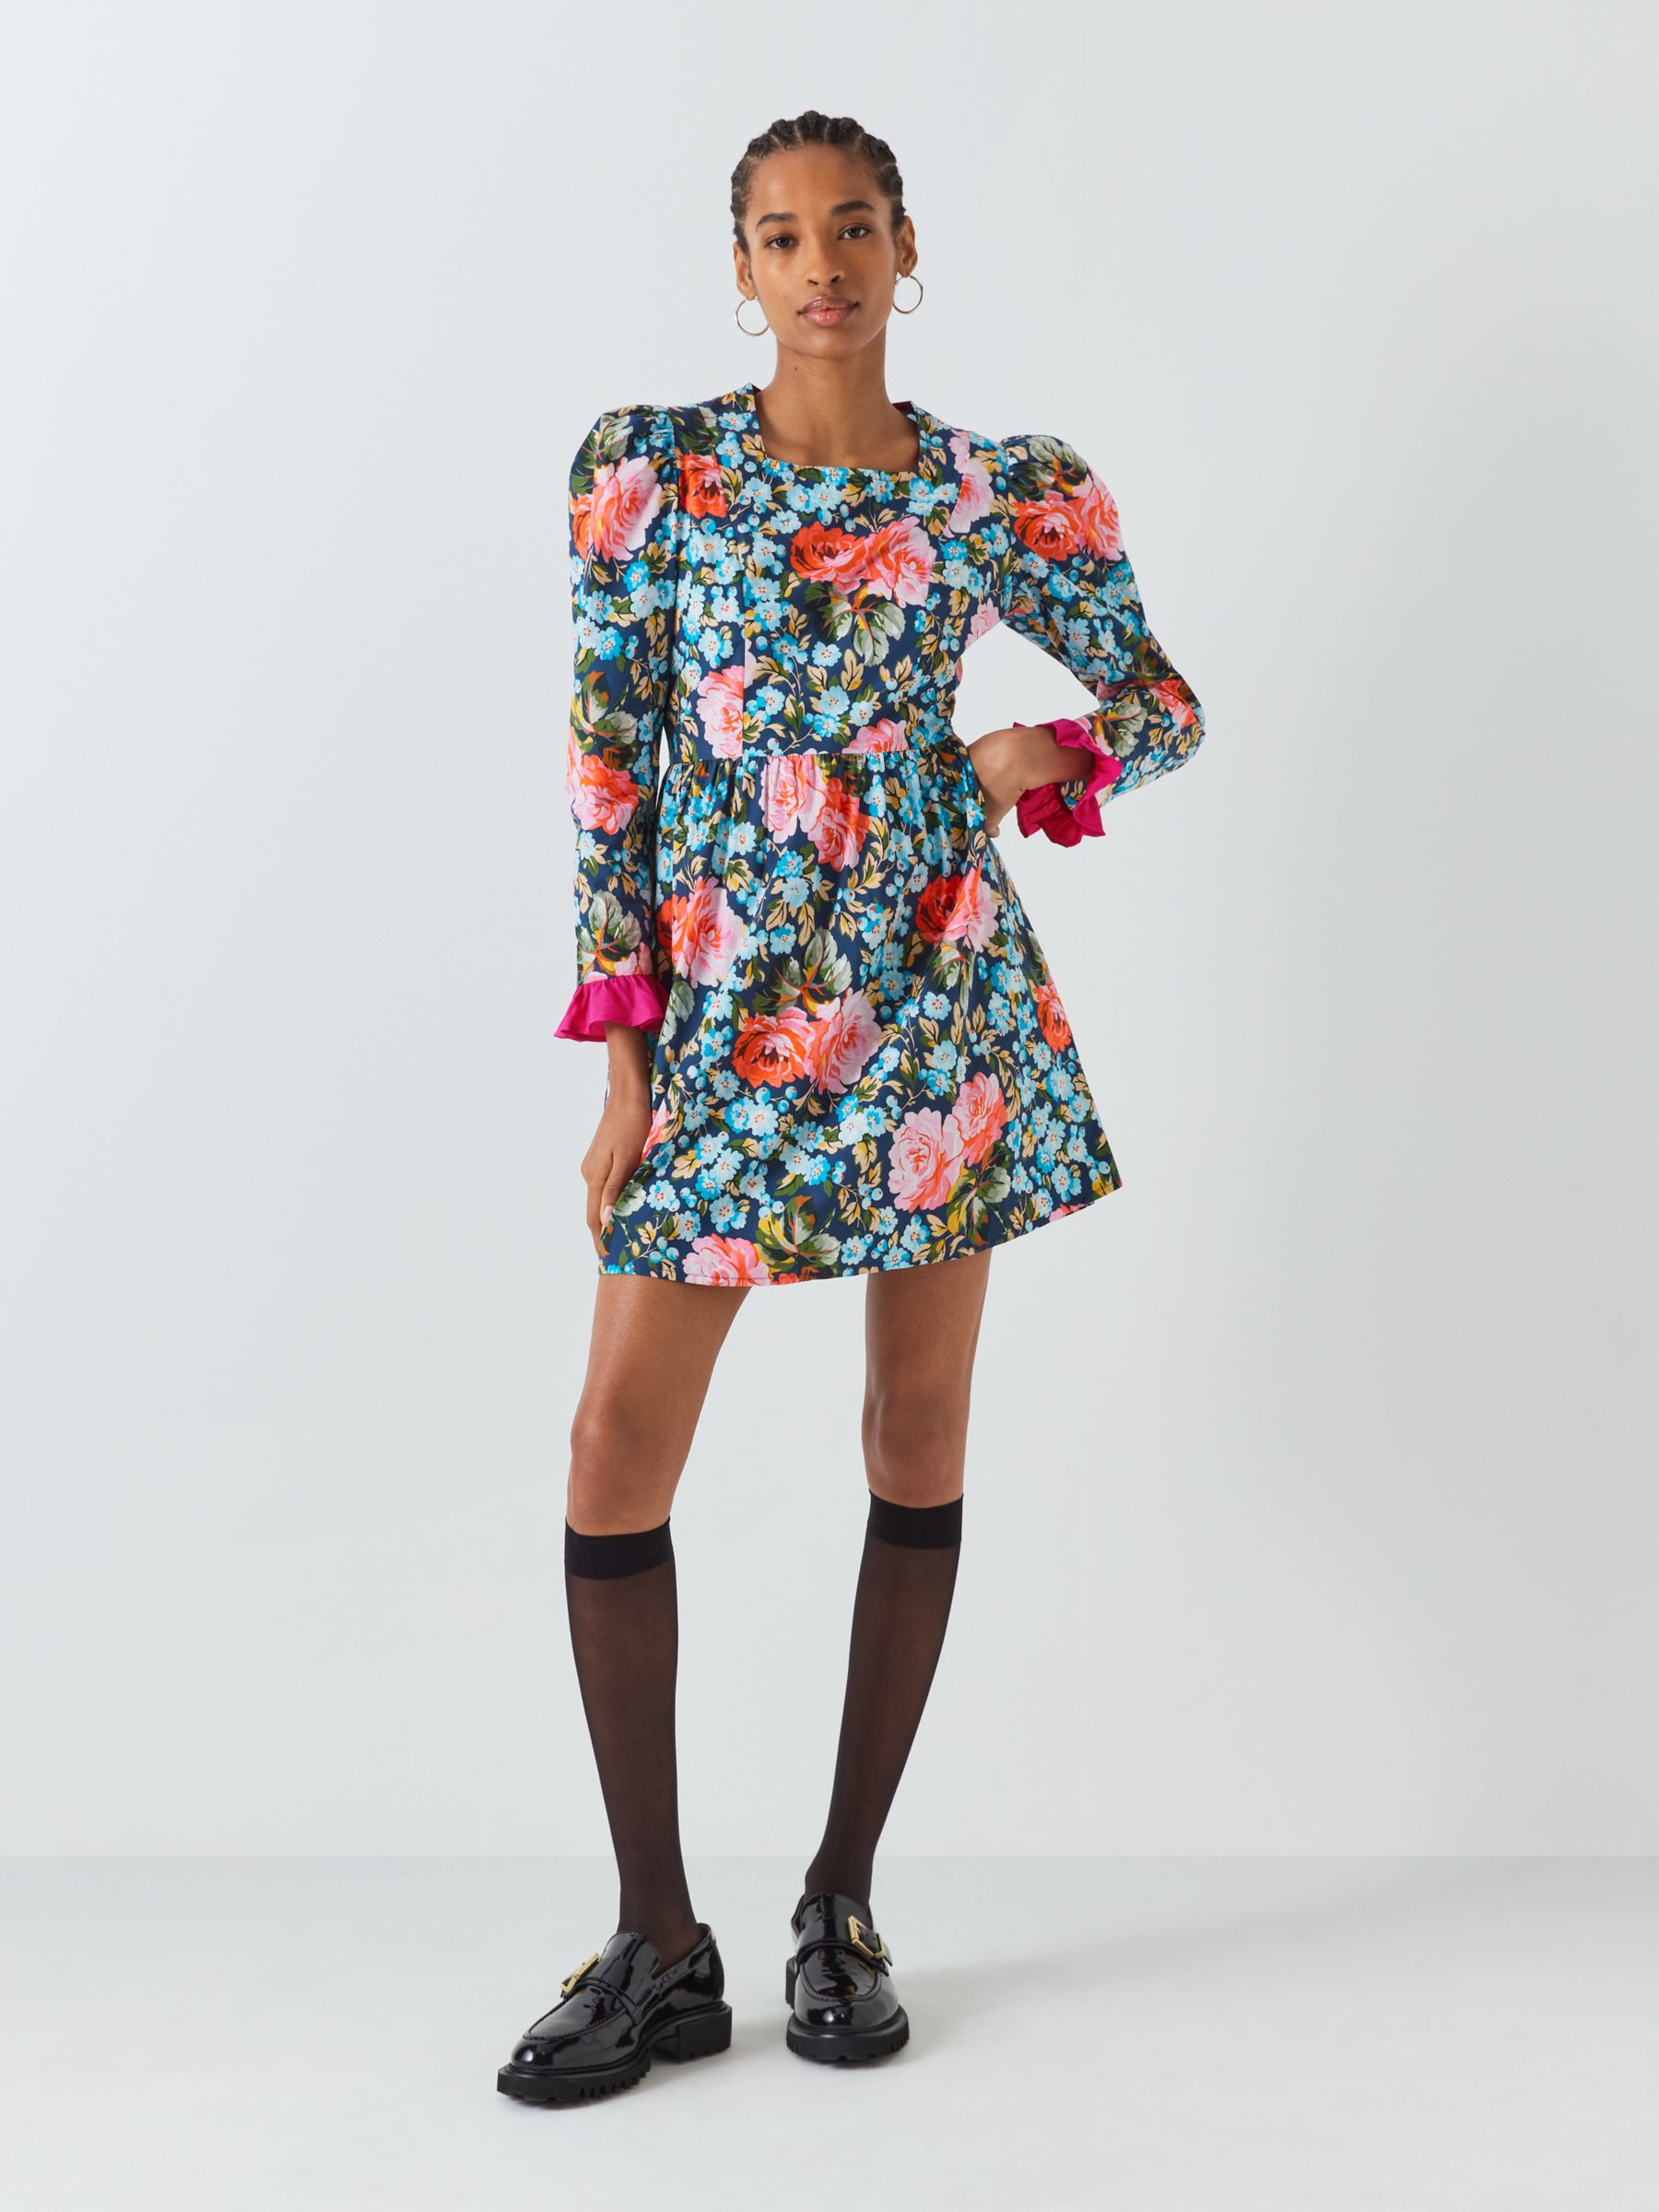 Batsheva x Laura Ashley Prarie Emilia Floral Mini Dress, Pink/Multi, 18